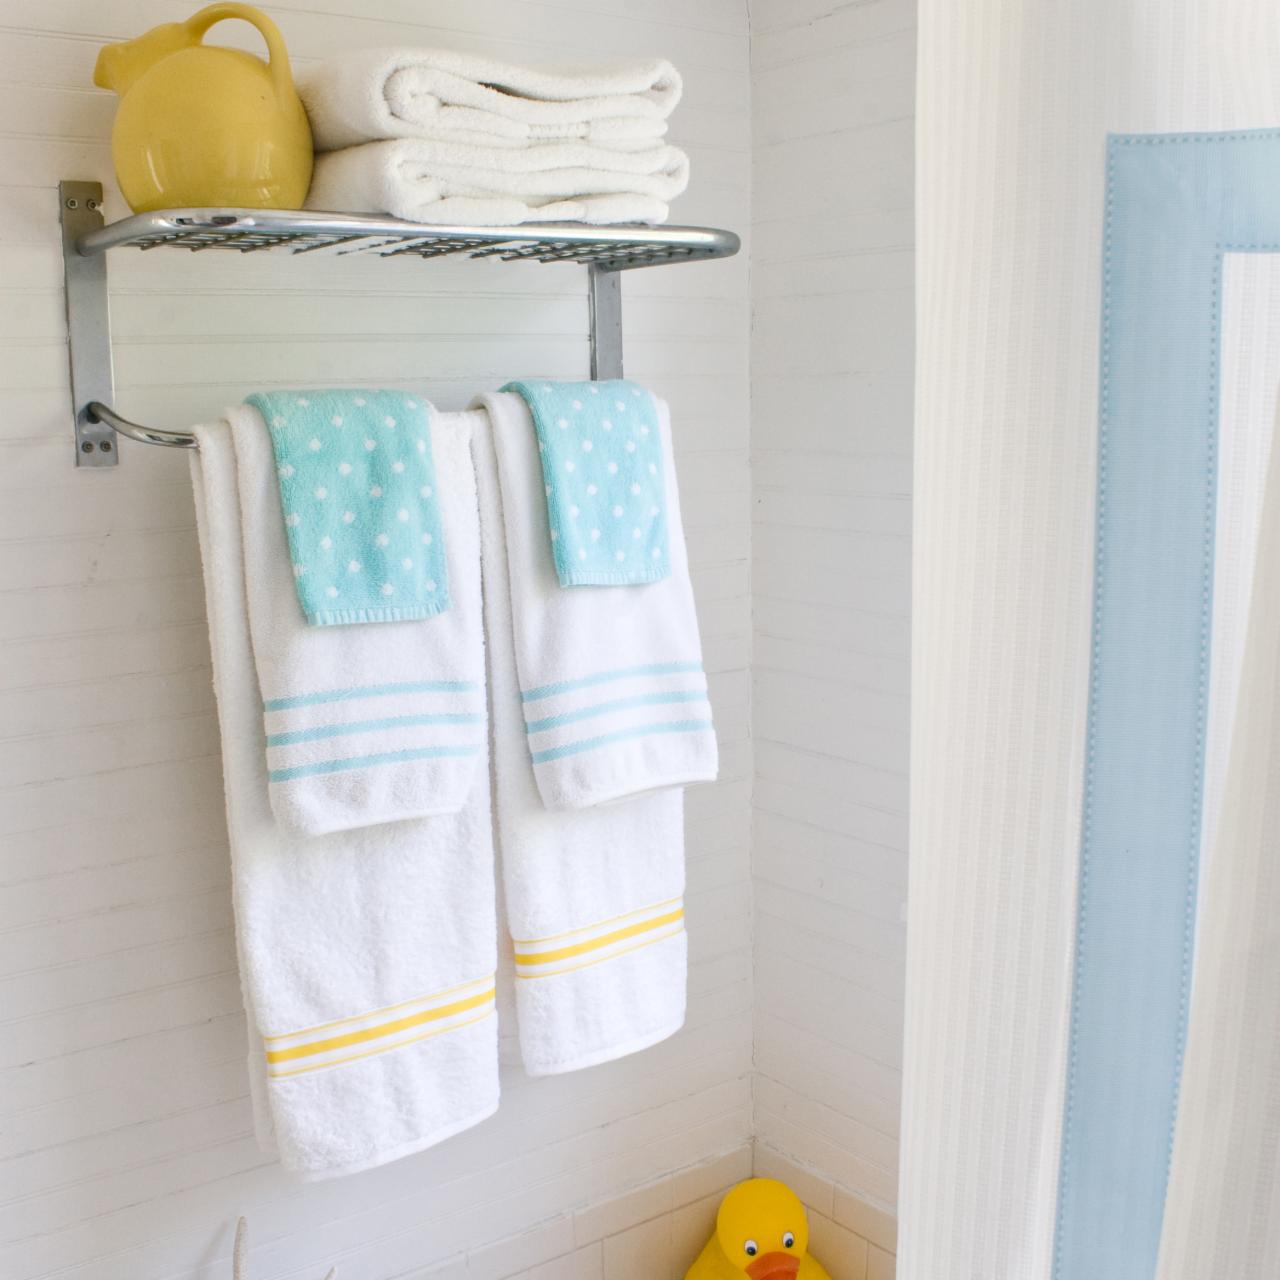 BATHROOM DECORATING IDEAS // Towel Folding Ideas for Bathroom